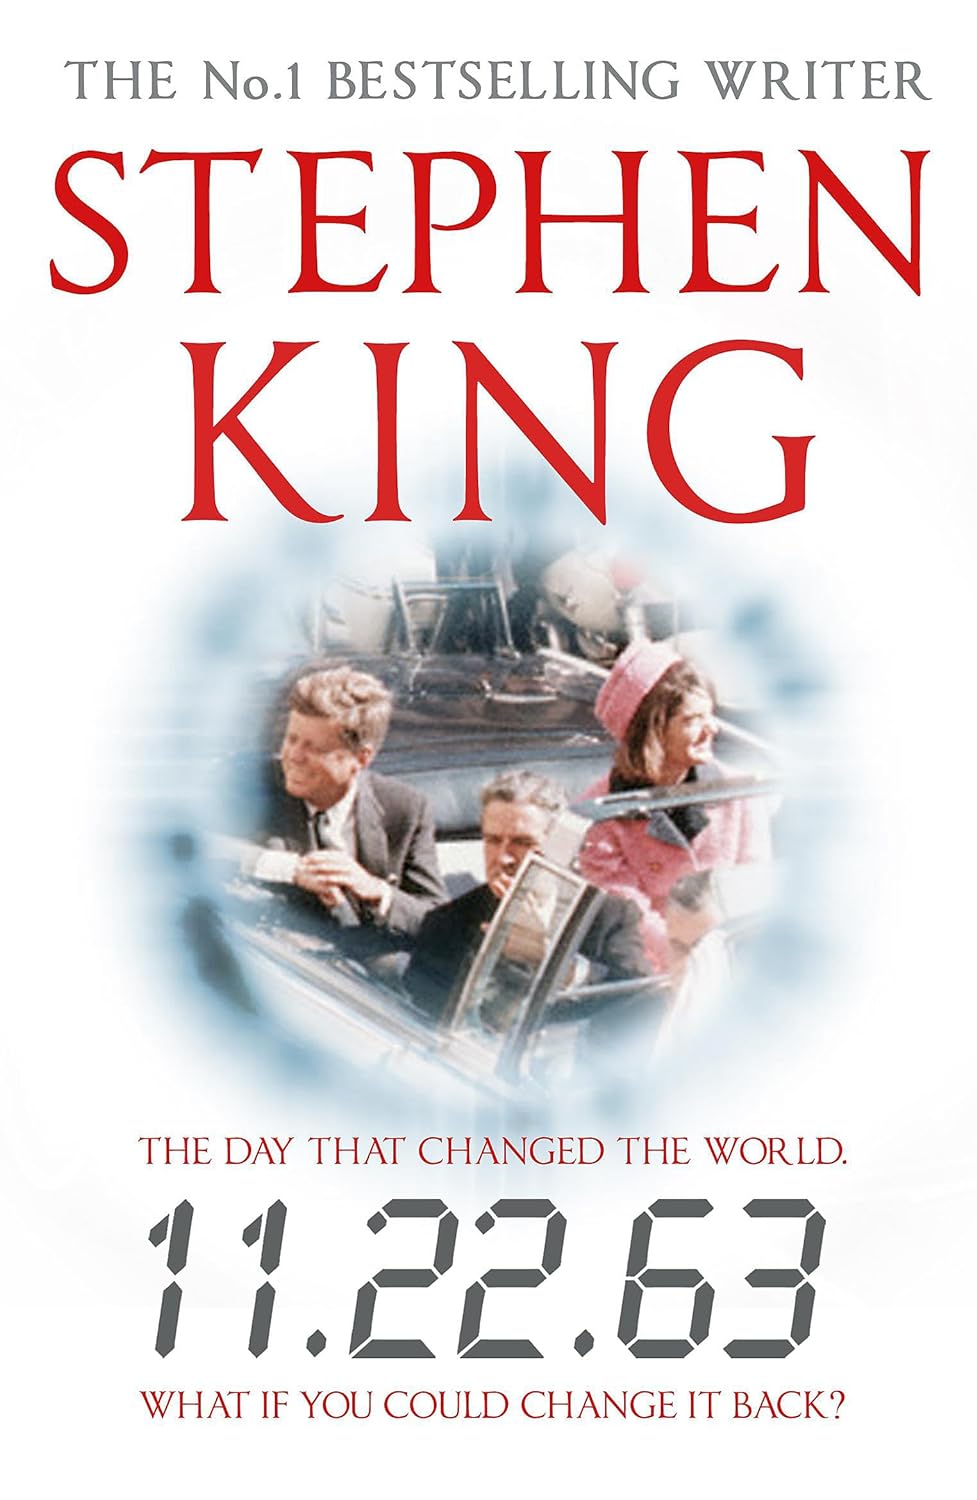 11.22.63 by Stephen King PDF book